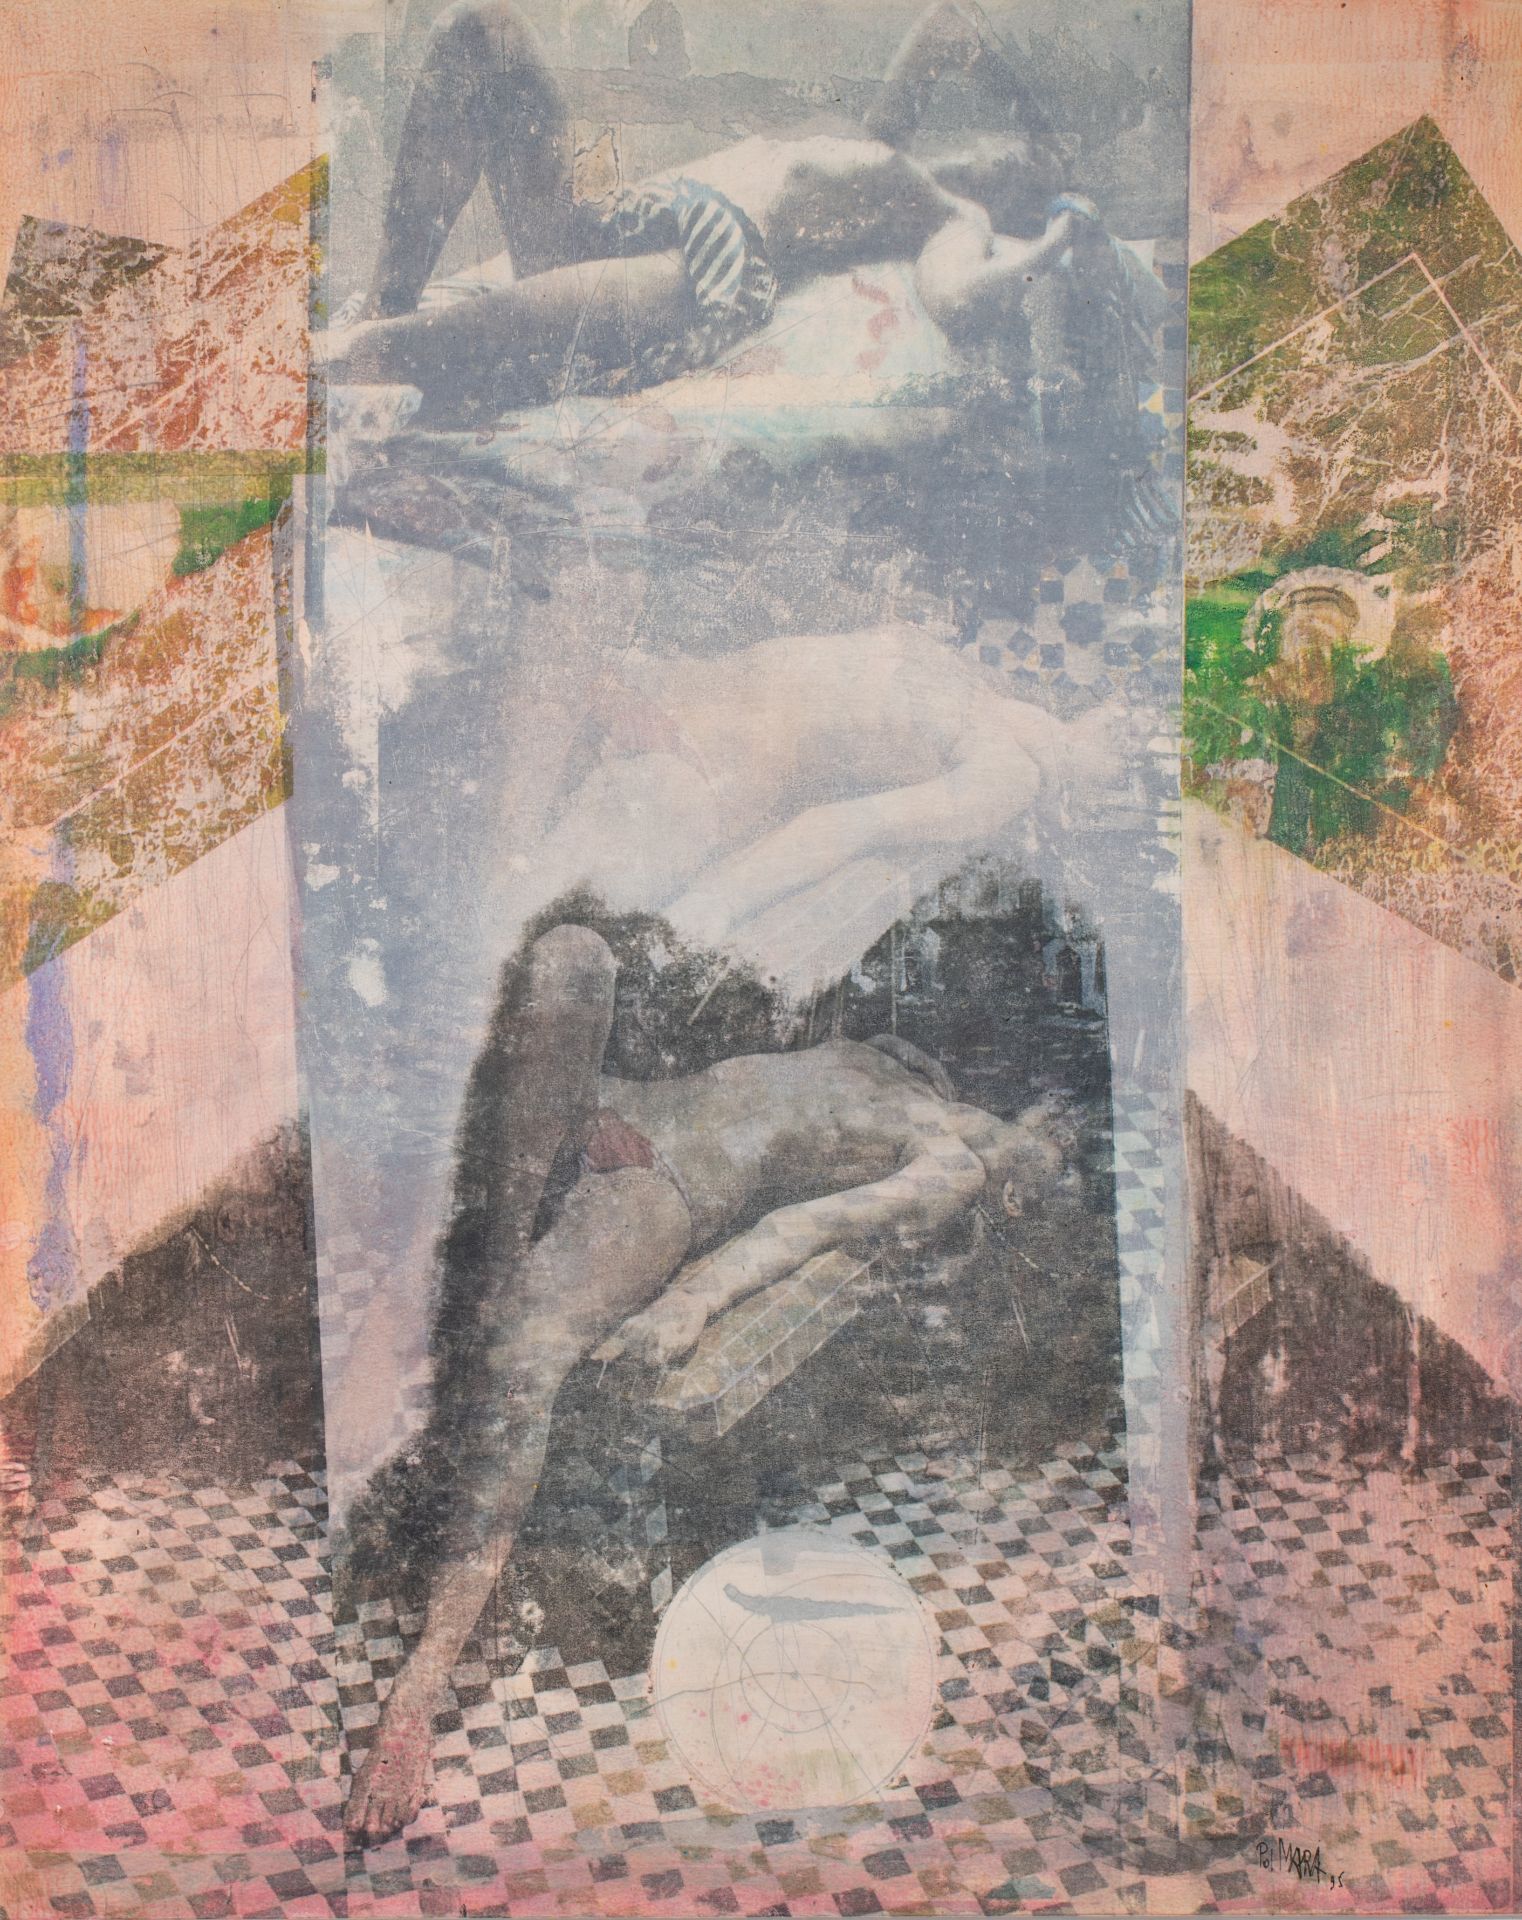 Pol Mara (1920-1998), 'Levitation', watercolour on silk marouflated on hardboard, 1995, 100 x 72 cm.